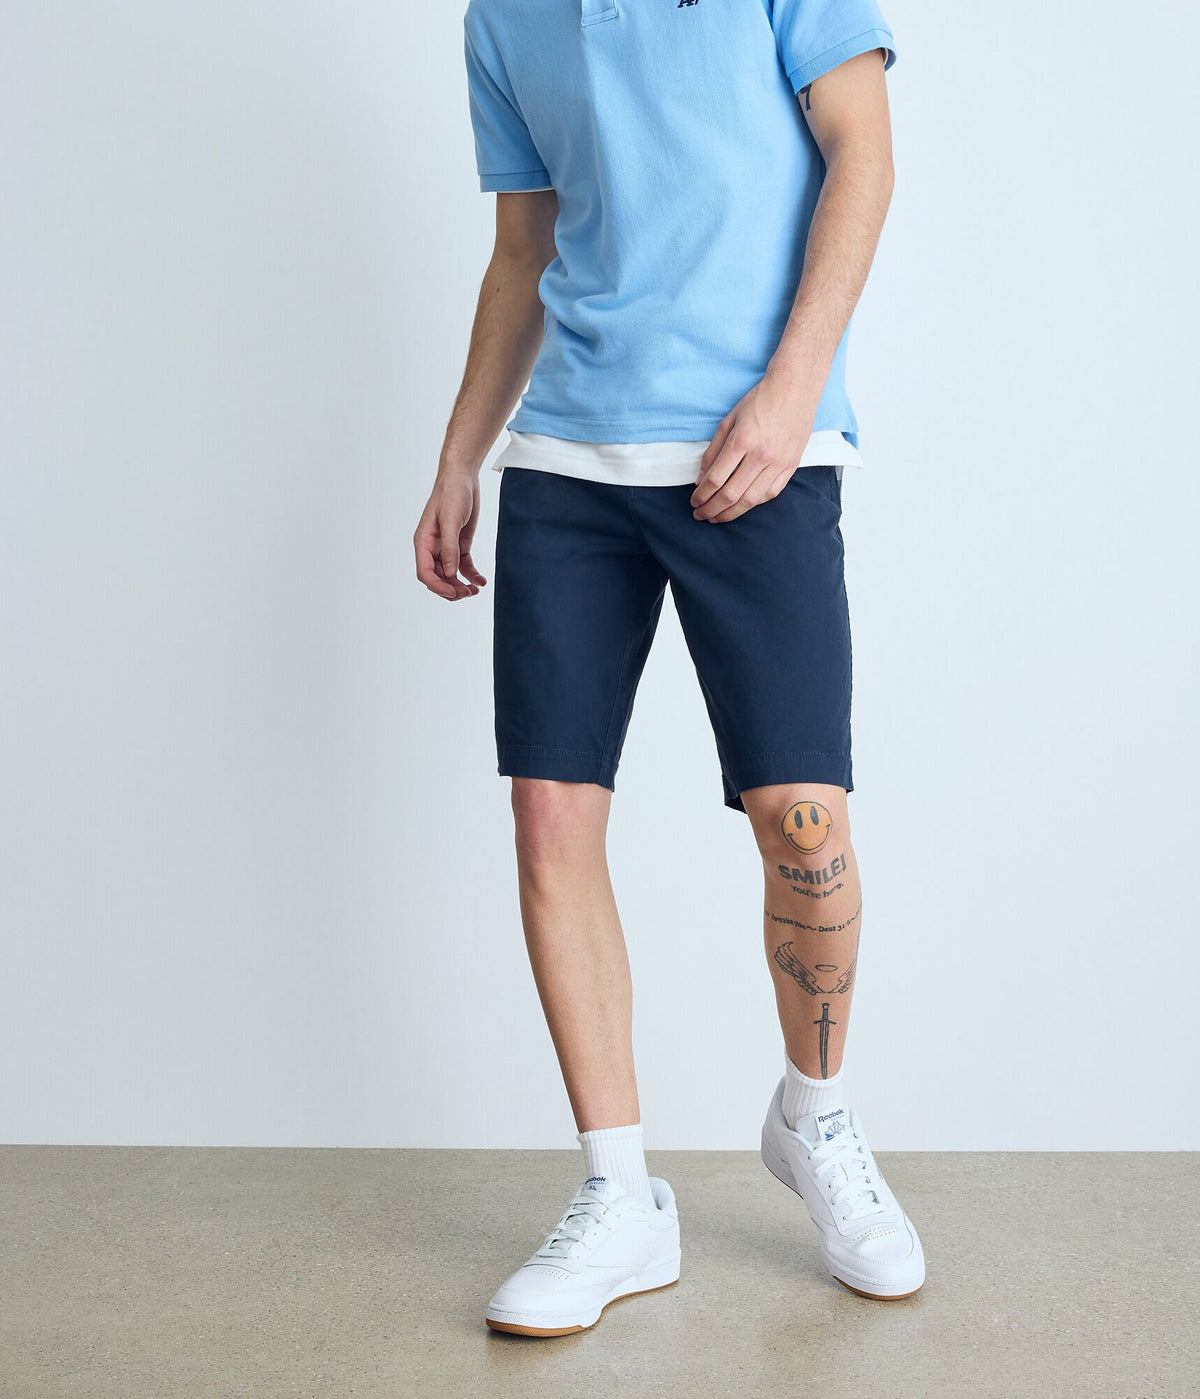 Aeropostale Mens' Longboard Chino Shorts 11.5" - Navy Blue - Size 42 - Cotton - Teen Fashion & Clothing Deep Navy